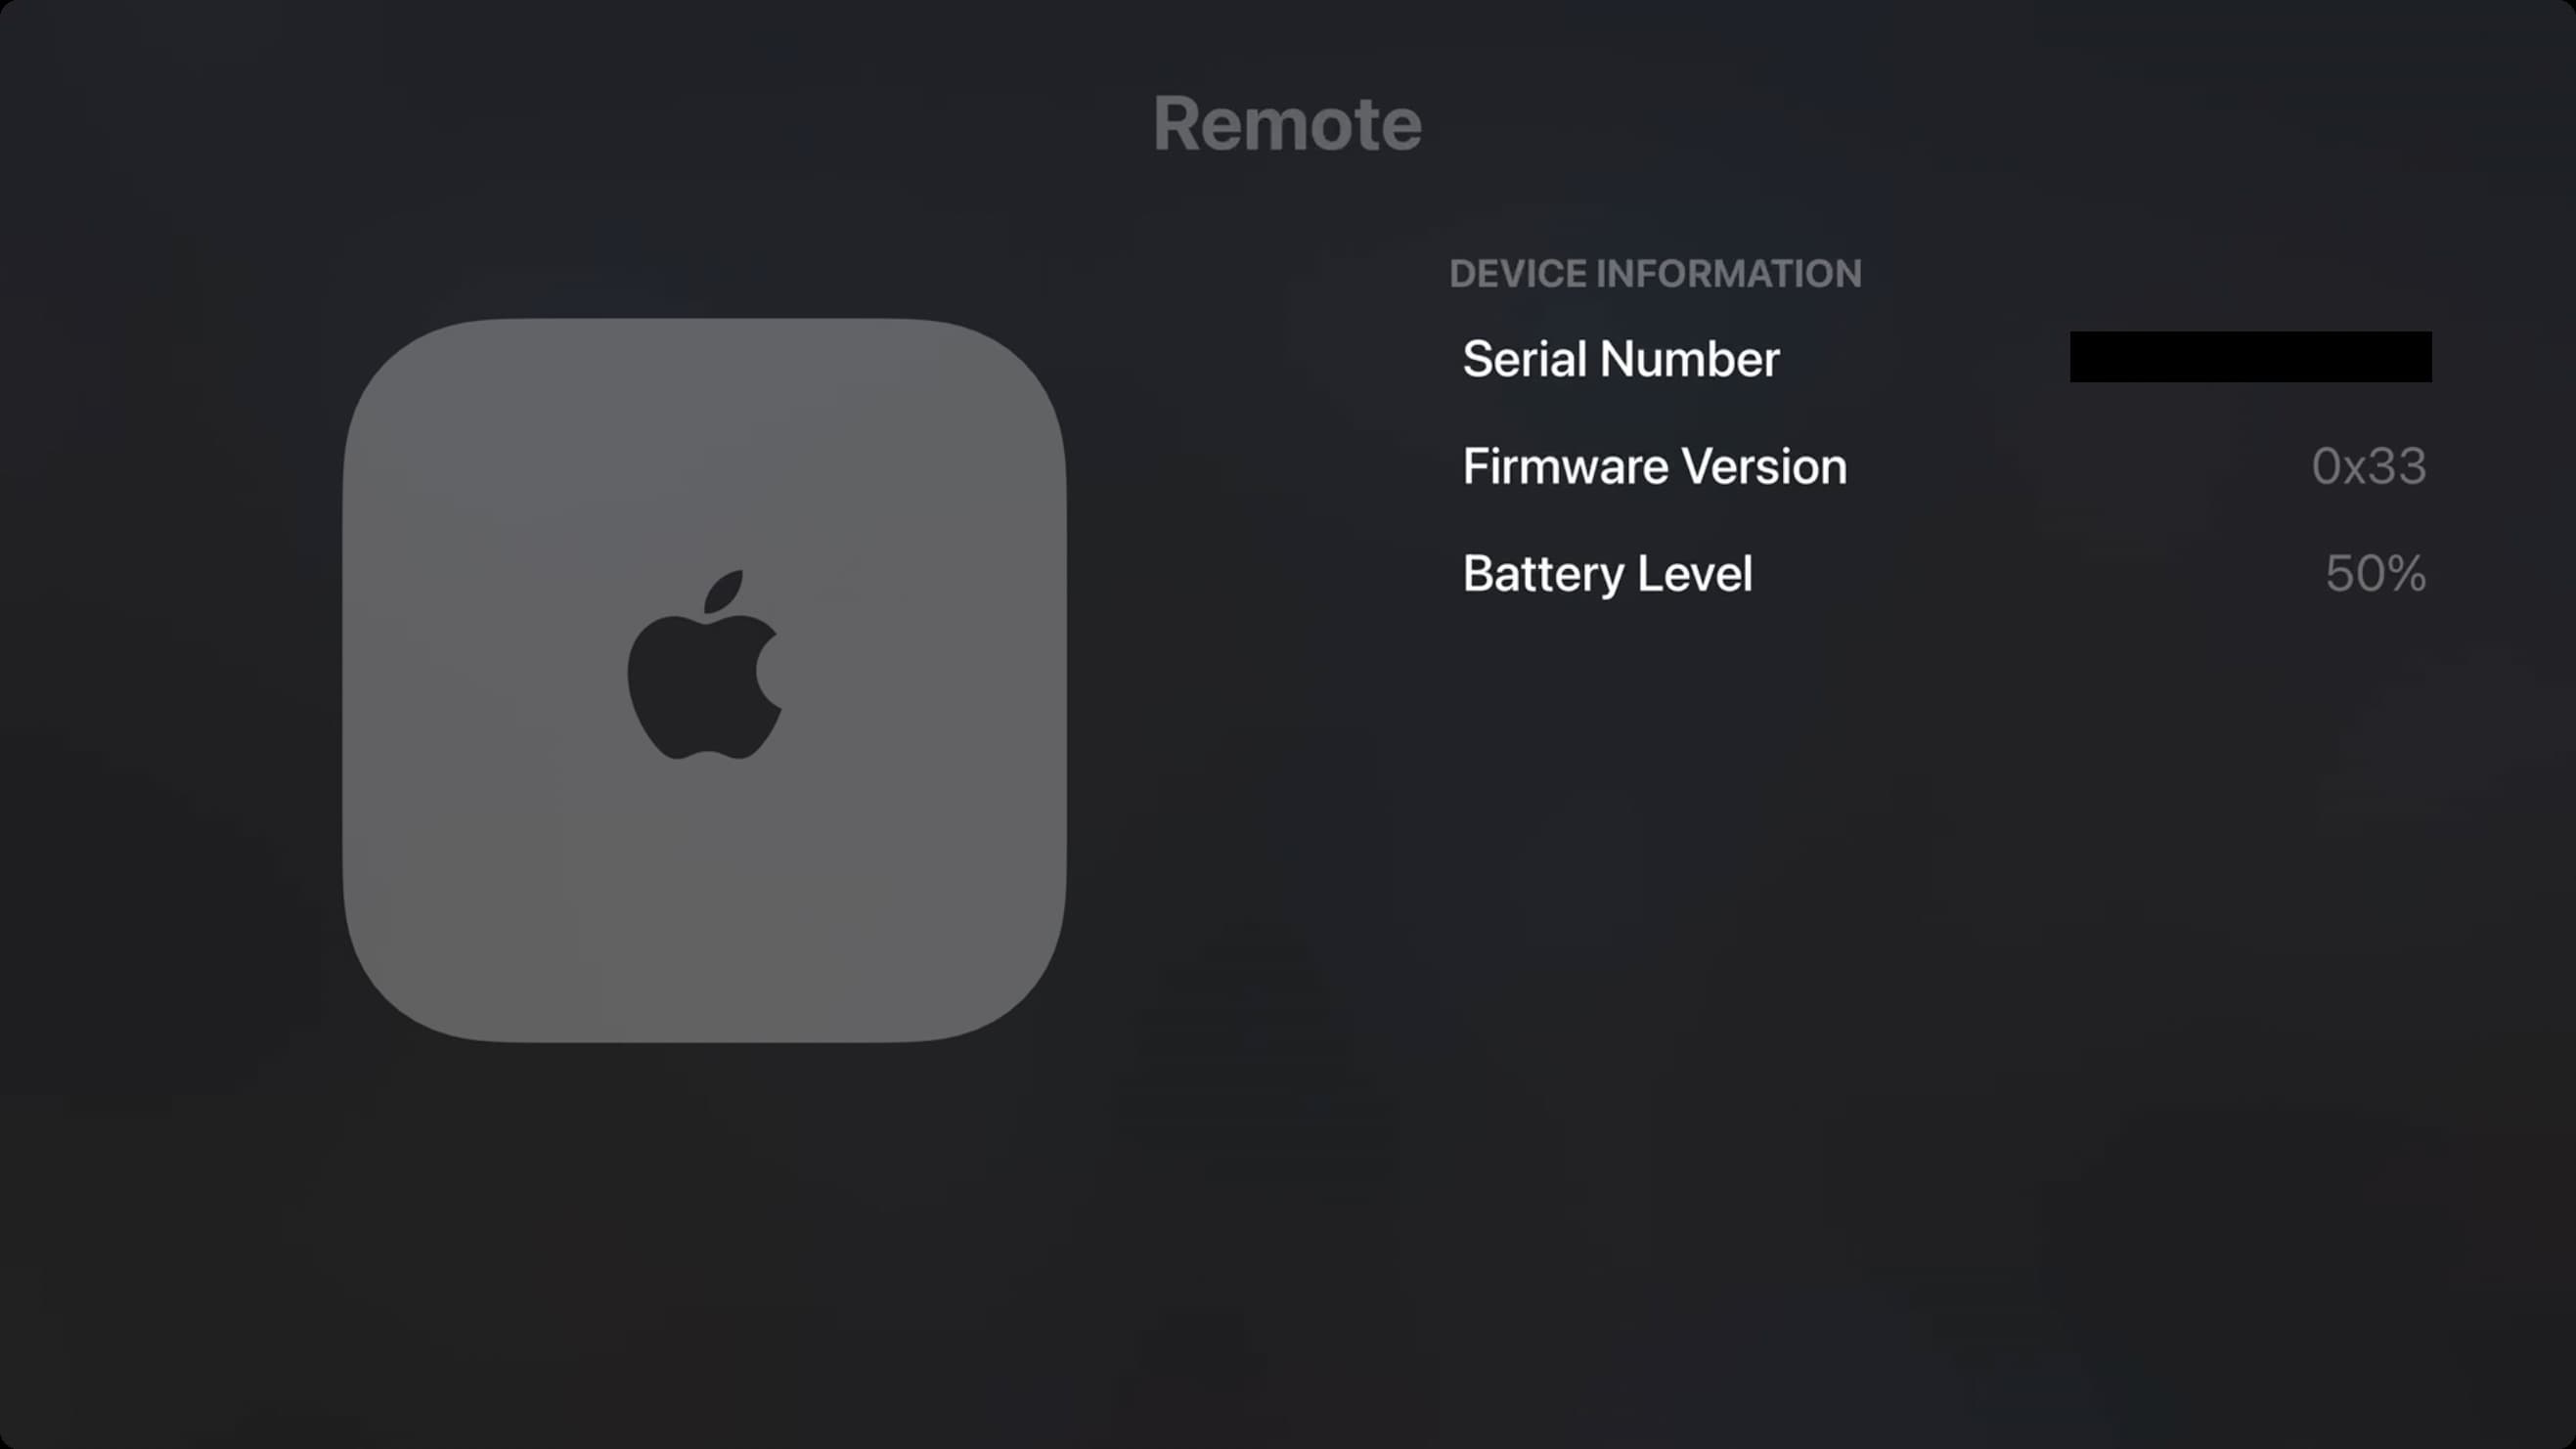 Firmware Version of Apple TV Remote